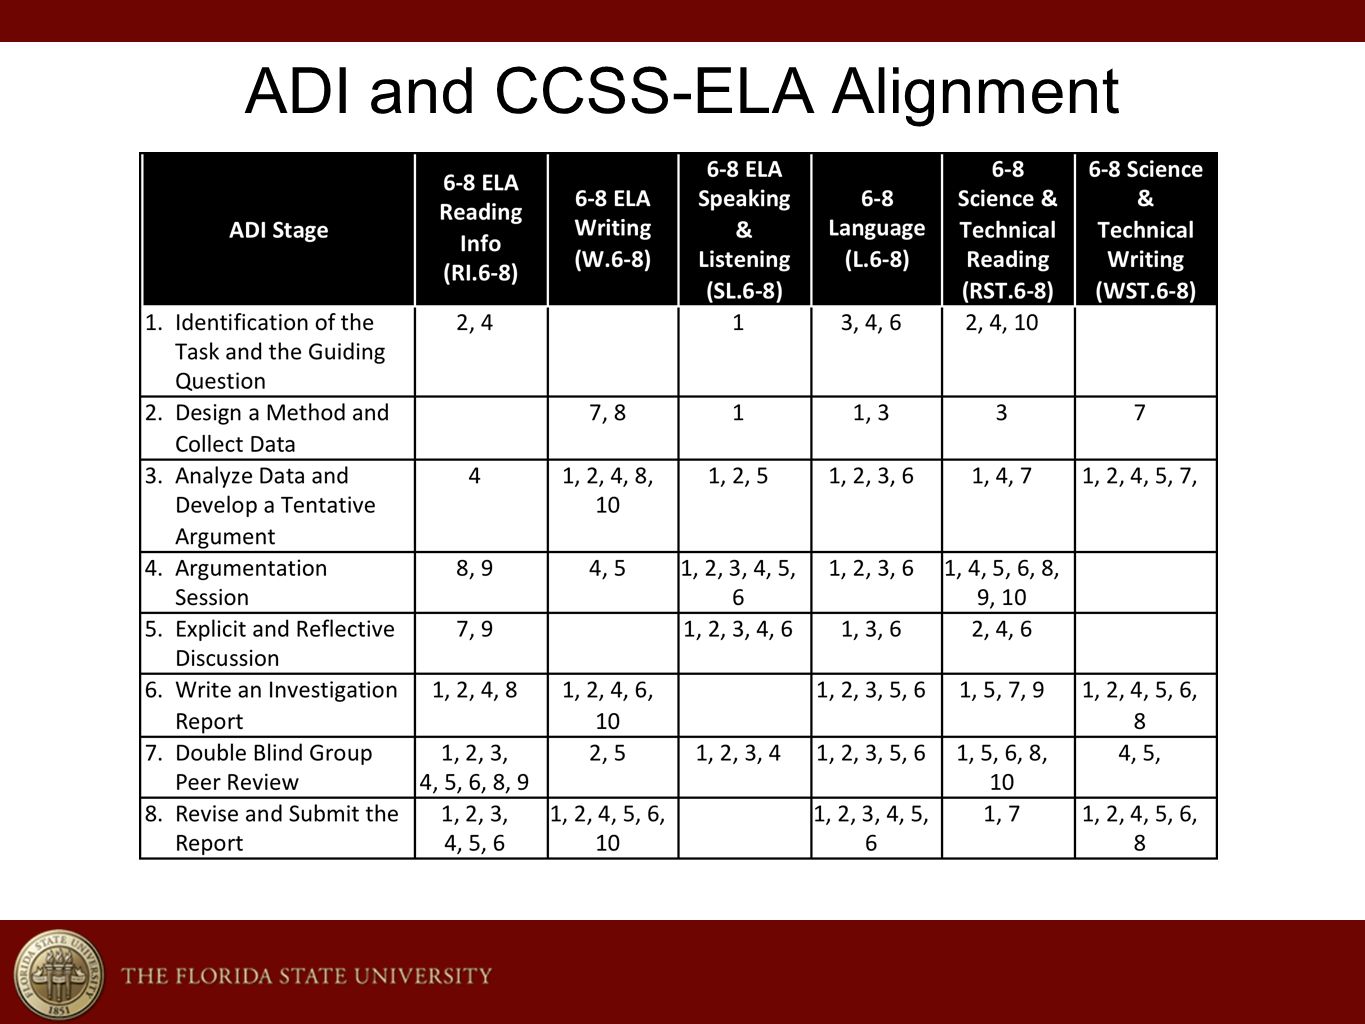 ADI and CCSS-ELA Alignment